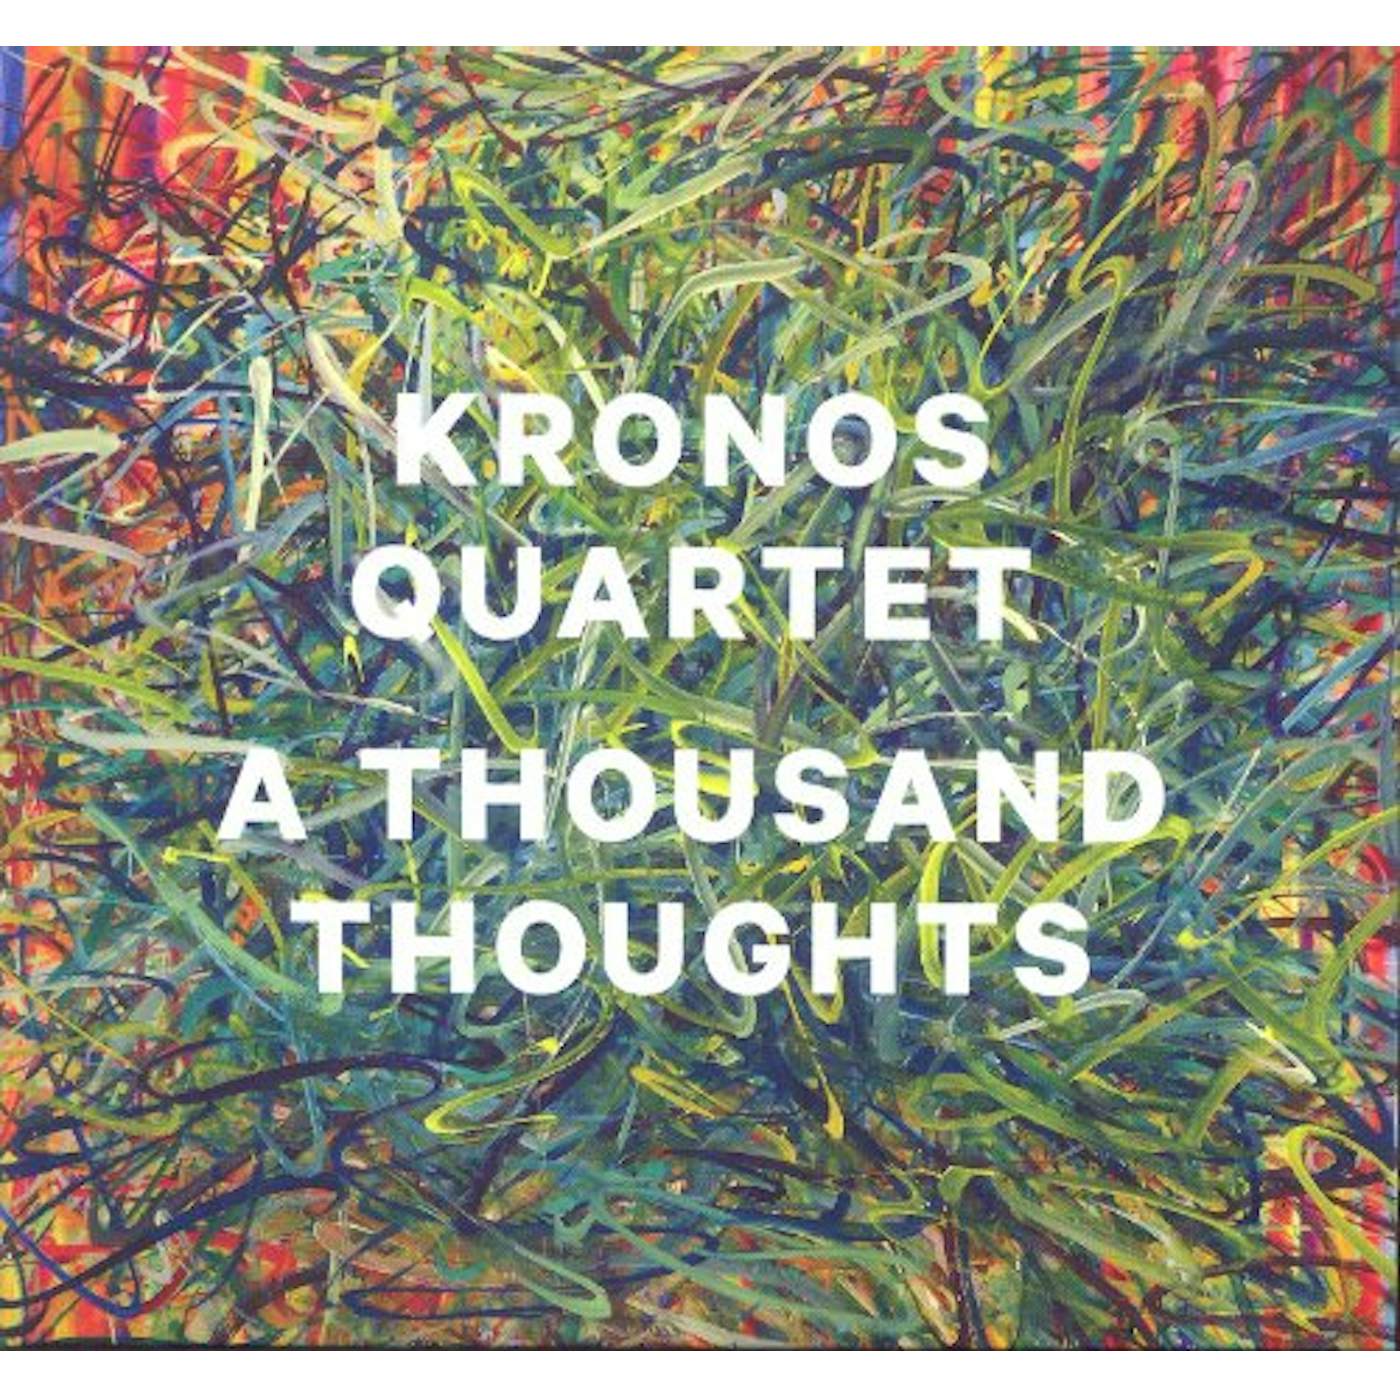 Kronos Quartet THOUSAND THOUGHTS CD